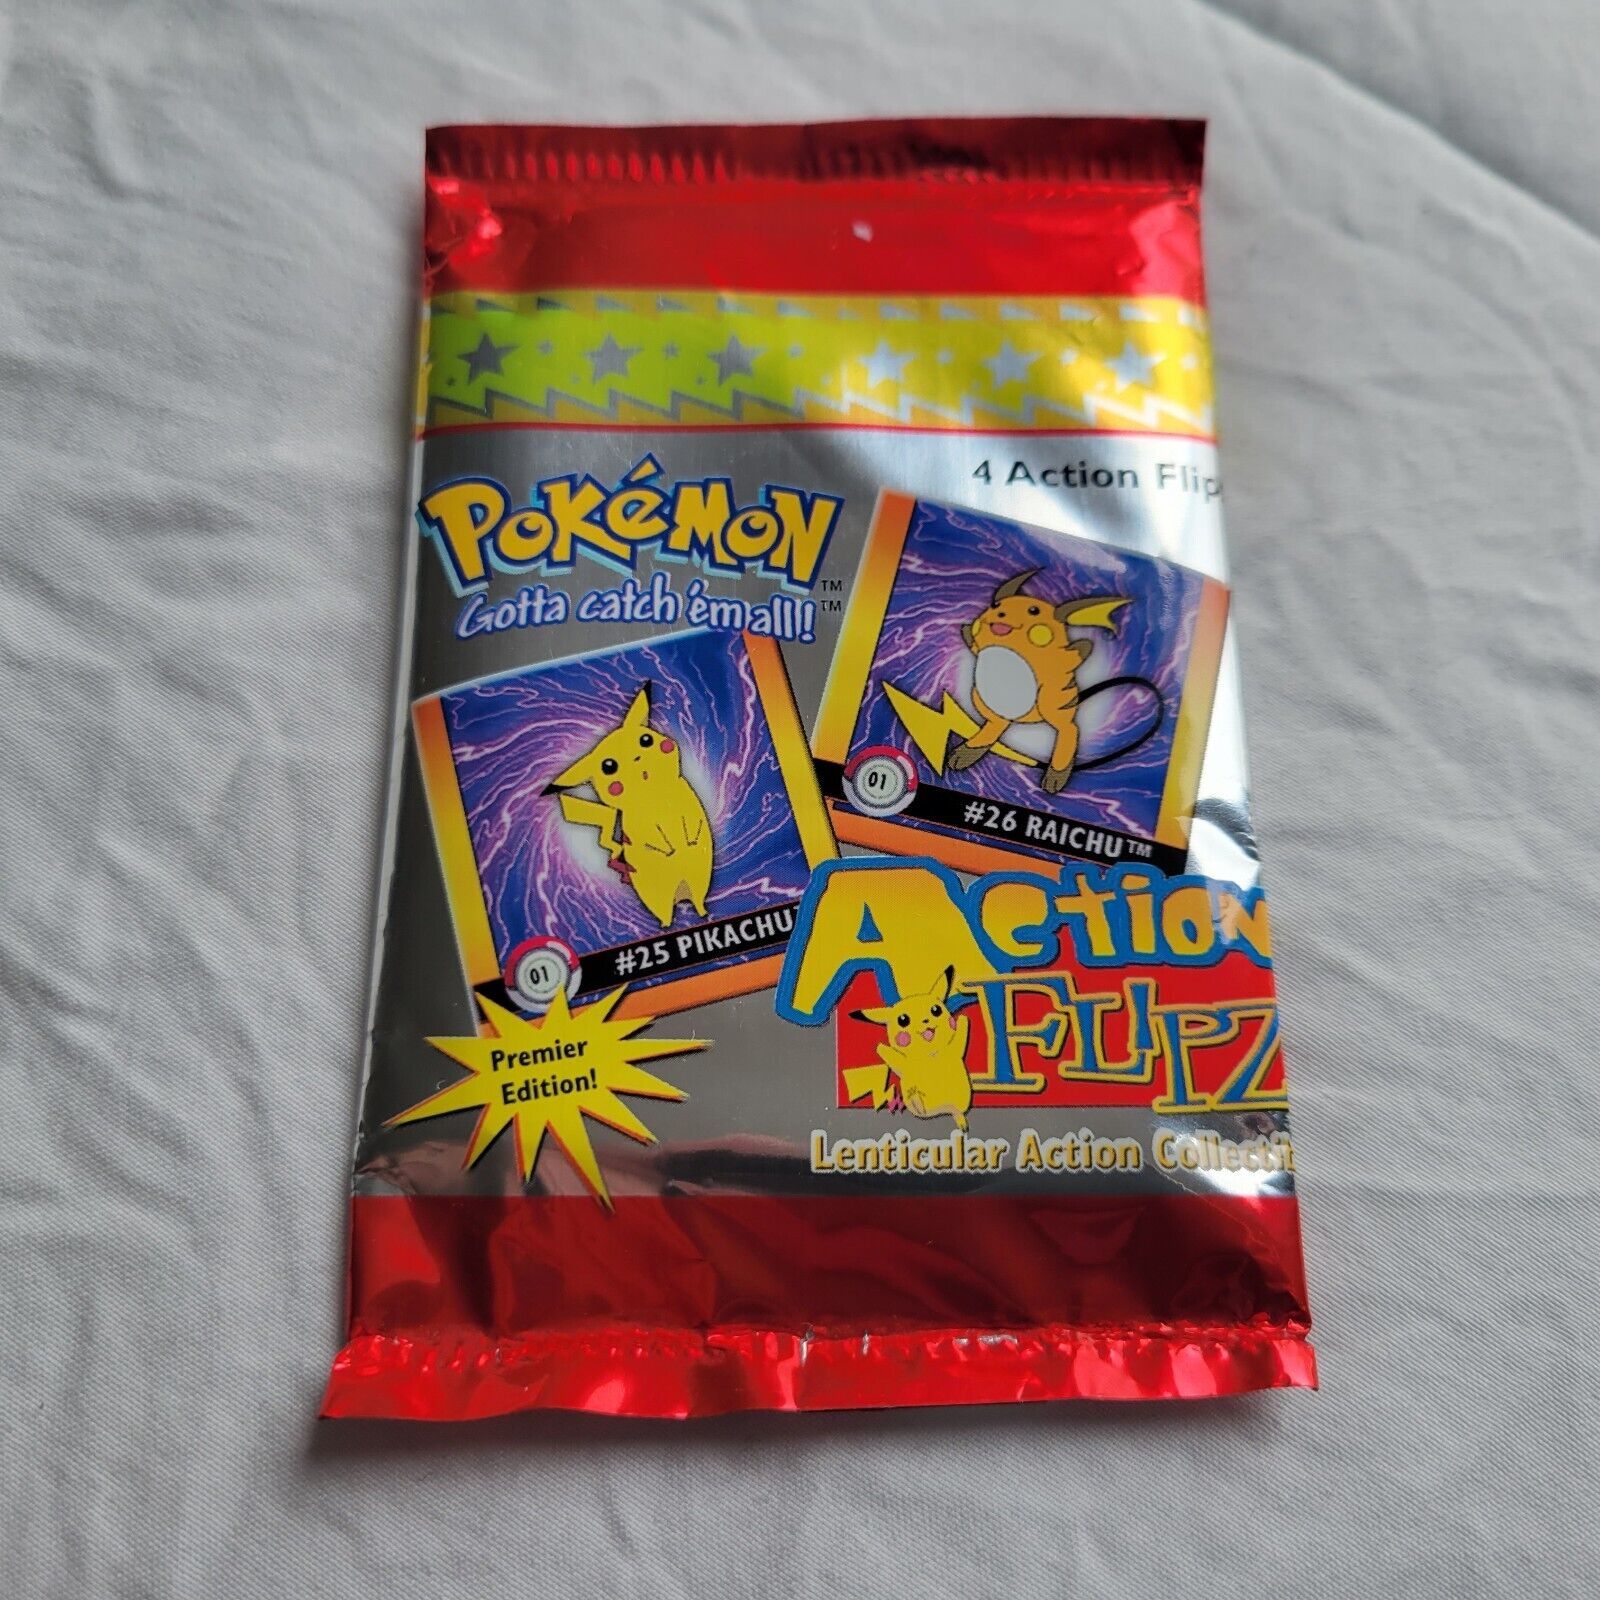 Pokemon Action Flipz Premier Edition 4 Card 1999 SEALED Nintendo Artbox Unopened